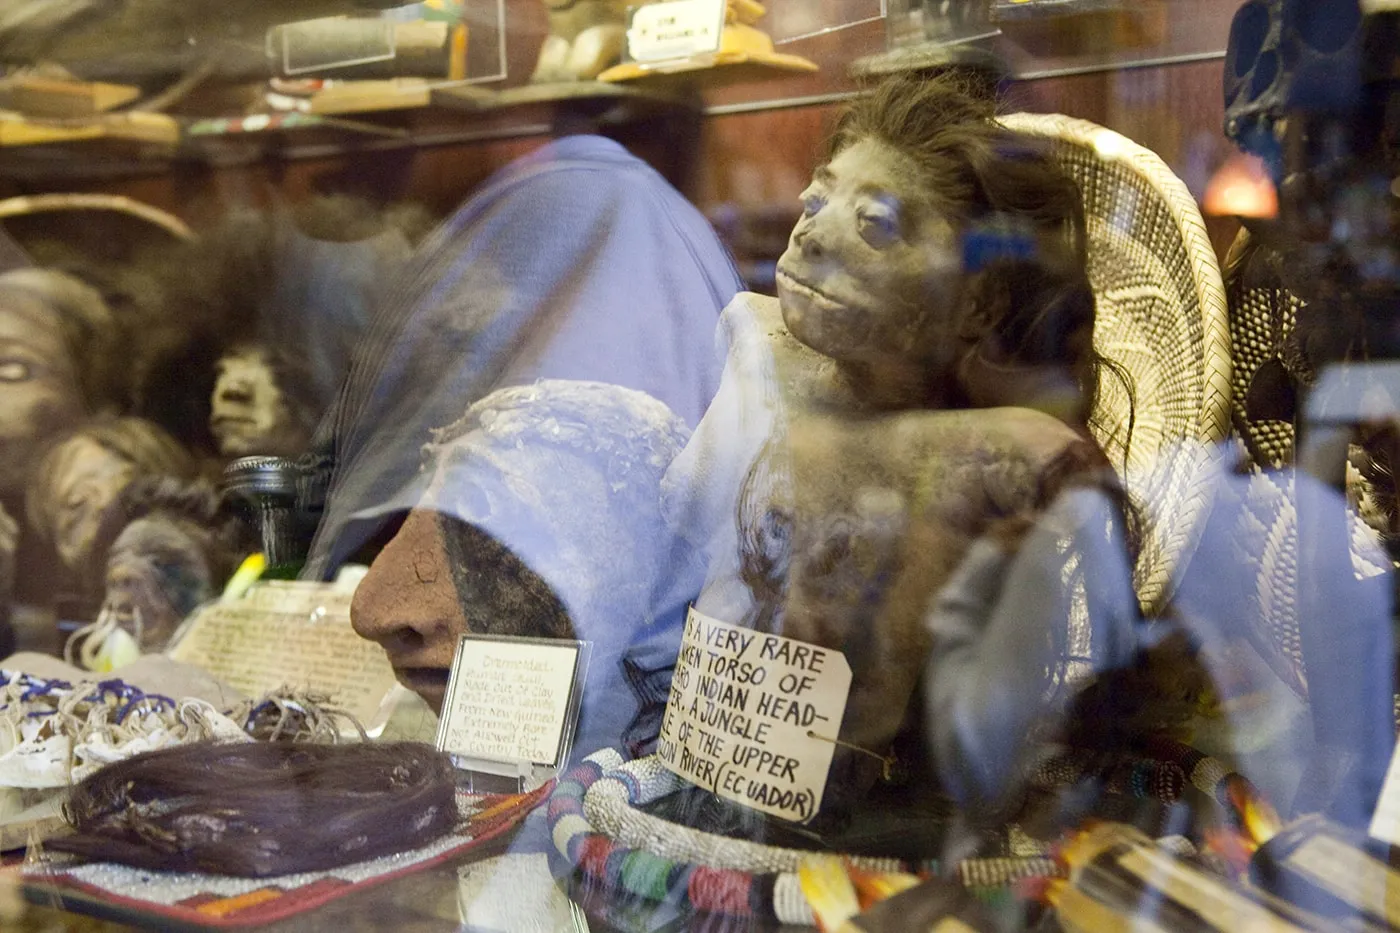 Shrunken torso at Ye Olde Curiosity Shoppe in Seattle, Washington